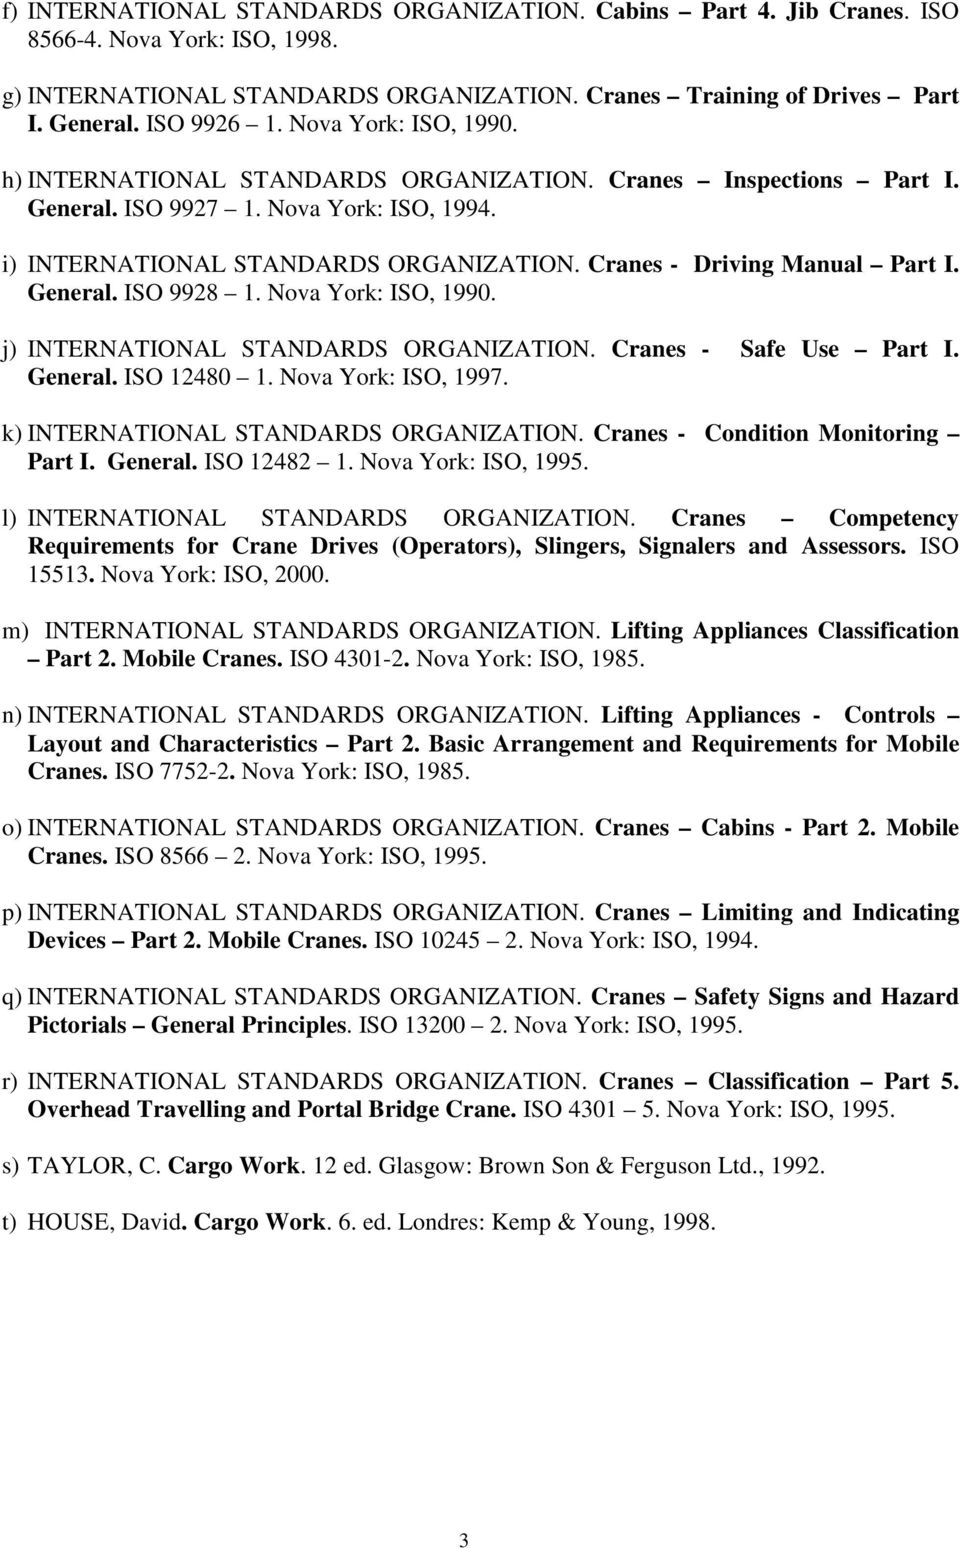 Cranes - Driving Manual Part I. General. ISO 9928 1. Nova York: ISO, 1990. j) INTERNATIONAL STANDARDS ORGANIZATION. Cranes - Safe Use Part I. General. ISO 12480 1. Nova York: ISO, 1997.